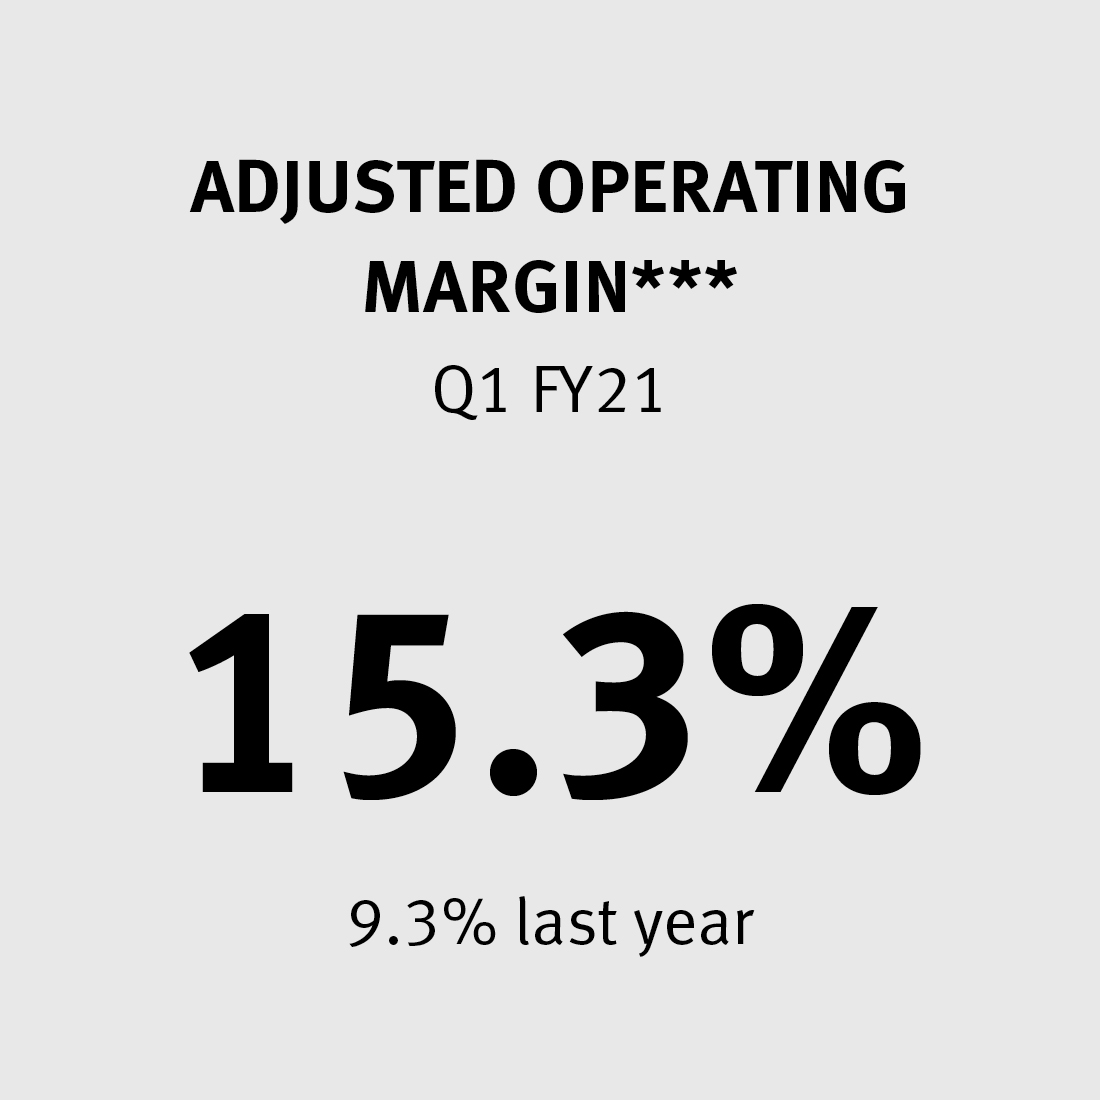 Adjusted Operating Margin 15.3% (9.3% last year)***